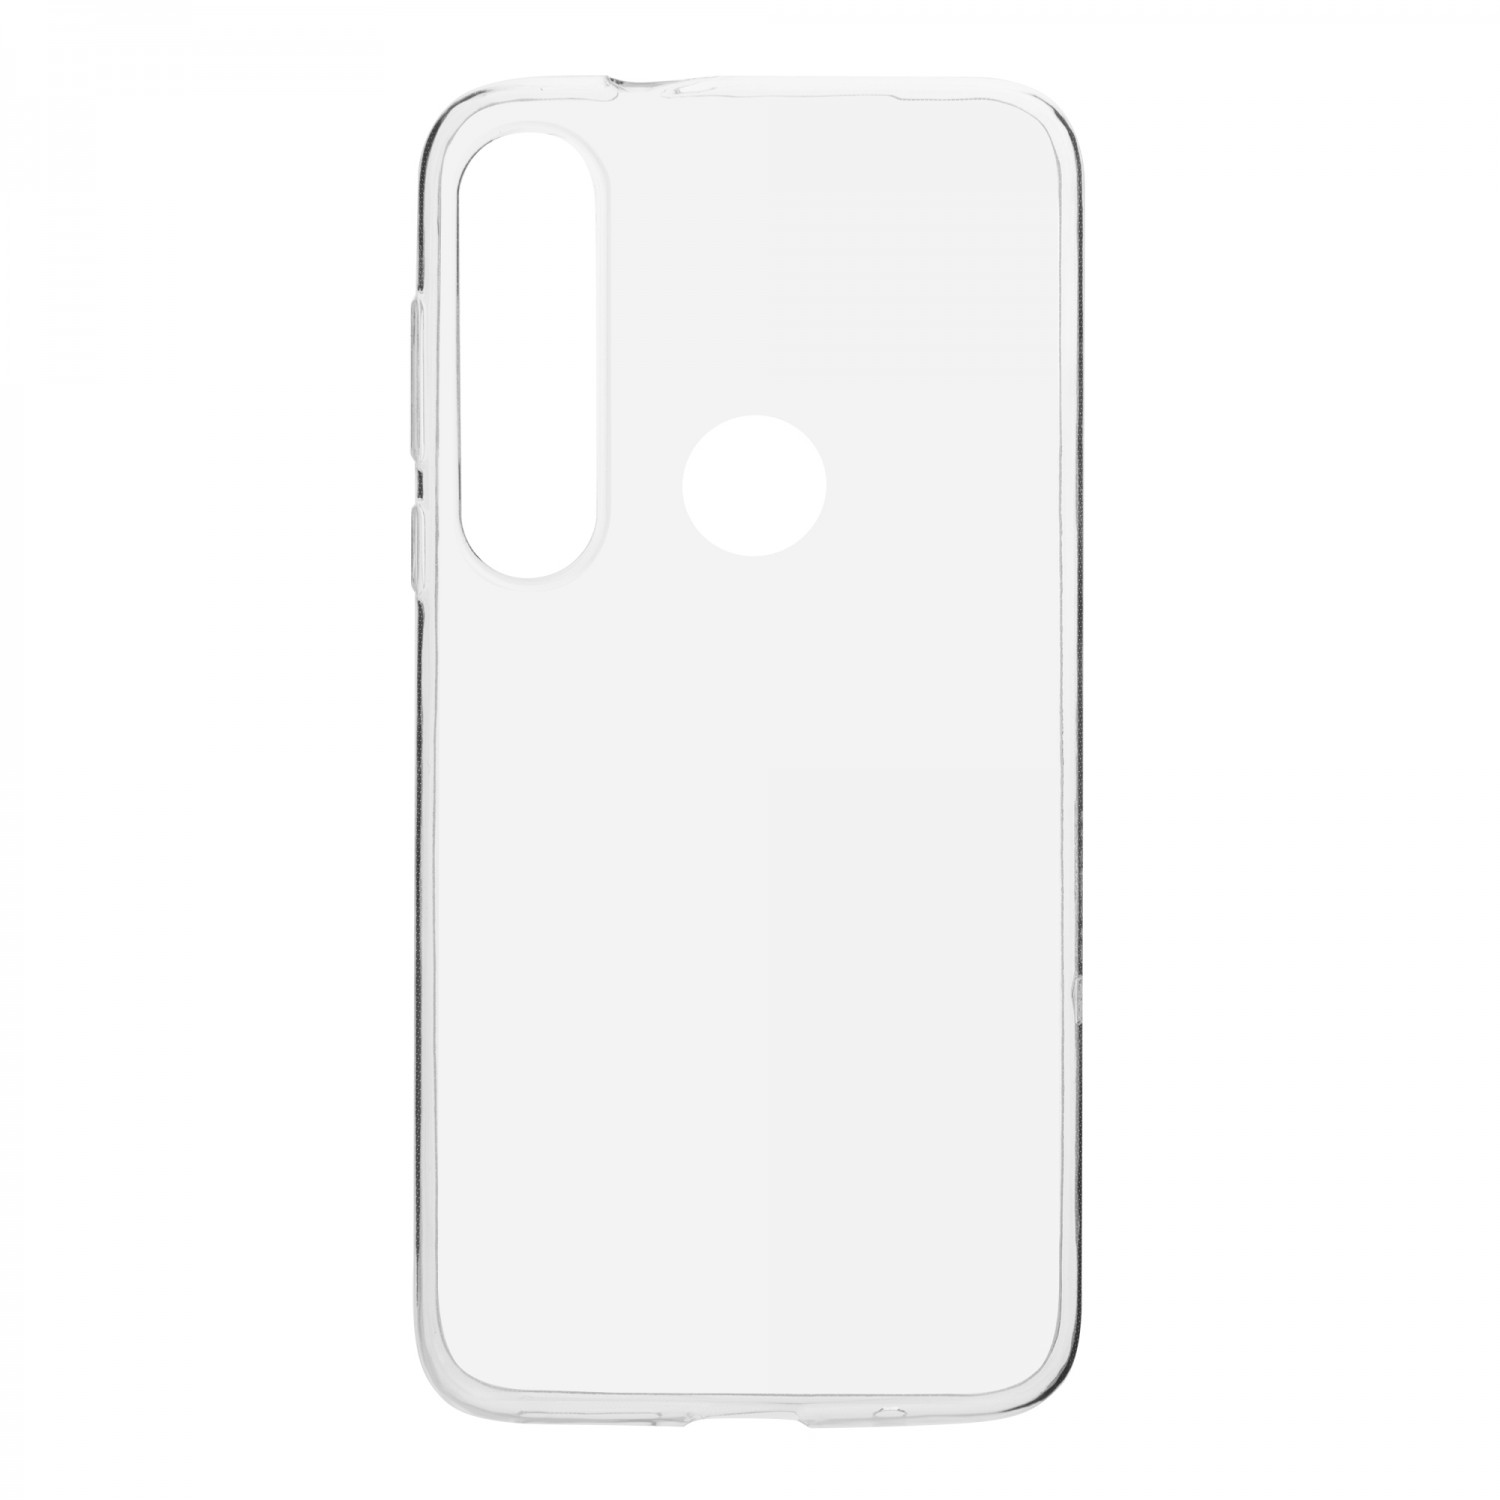 Tactical silikonové pouzdro, obal, kryt Motorola Moto G8 Plus transparent